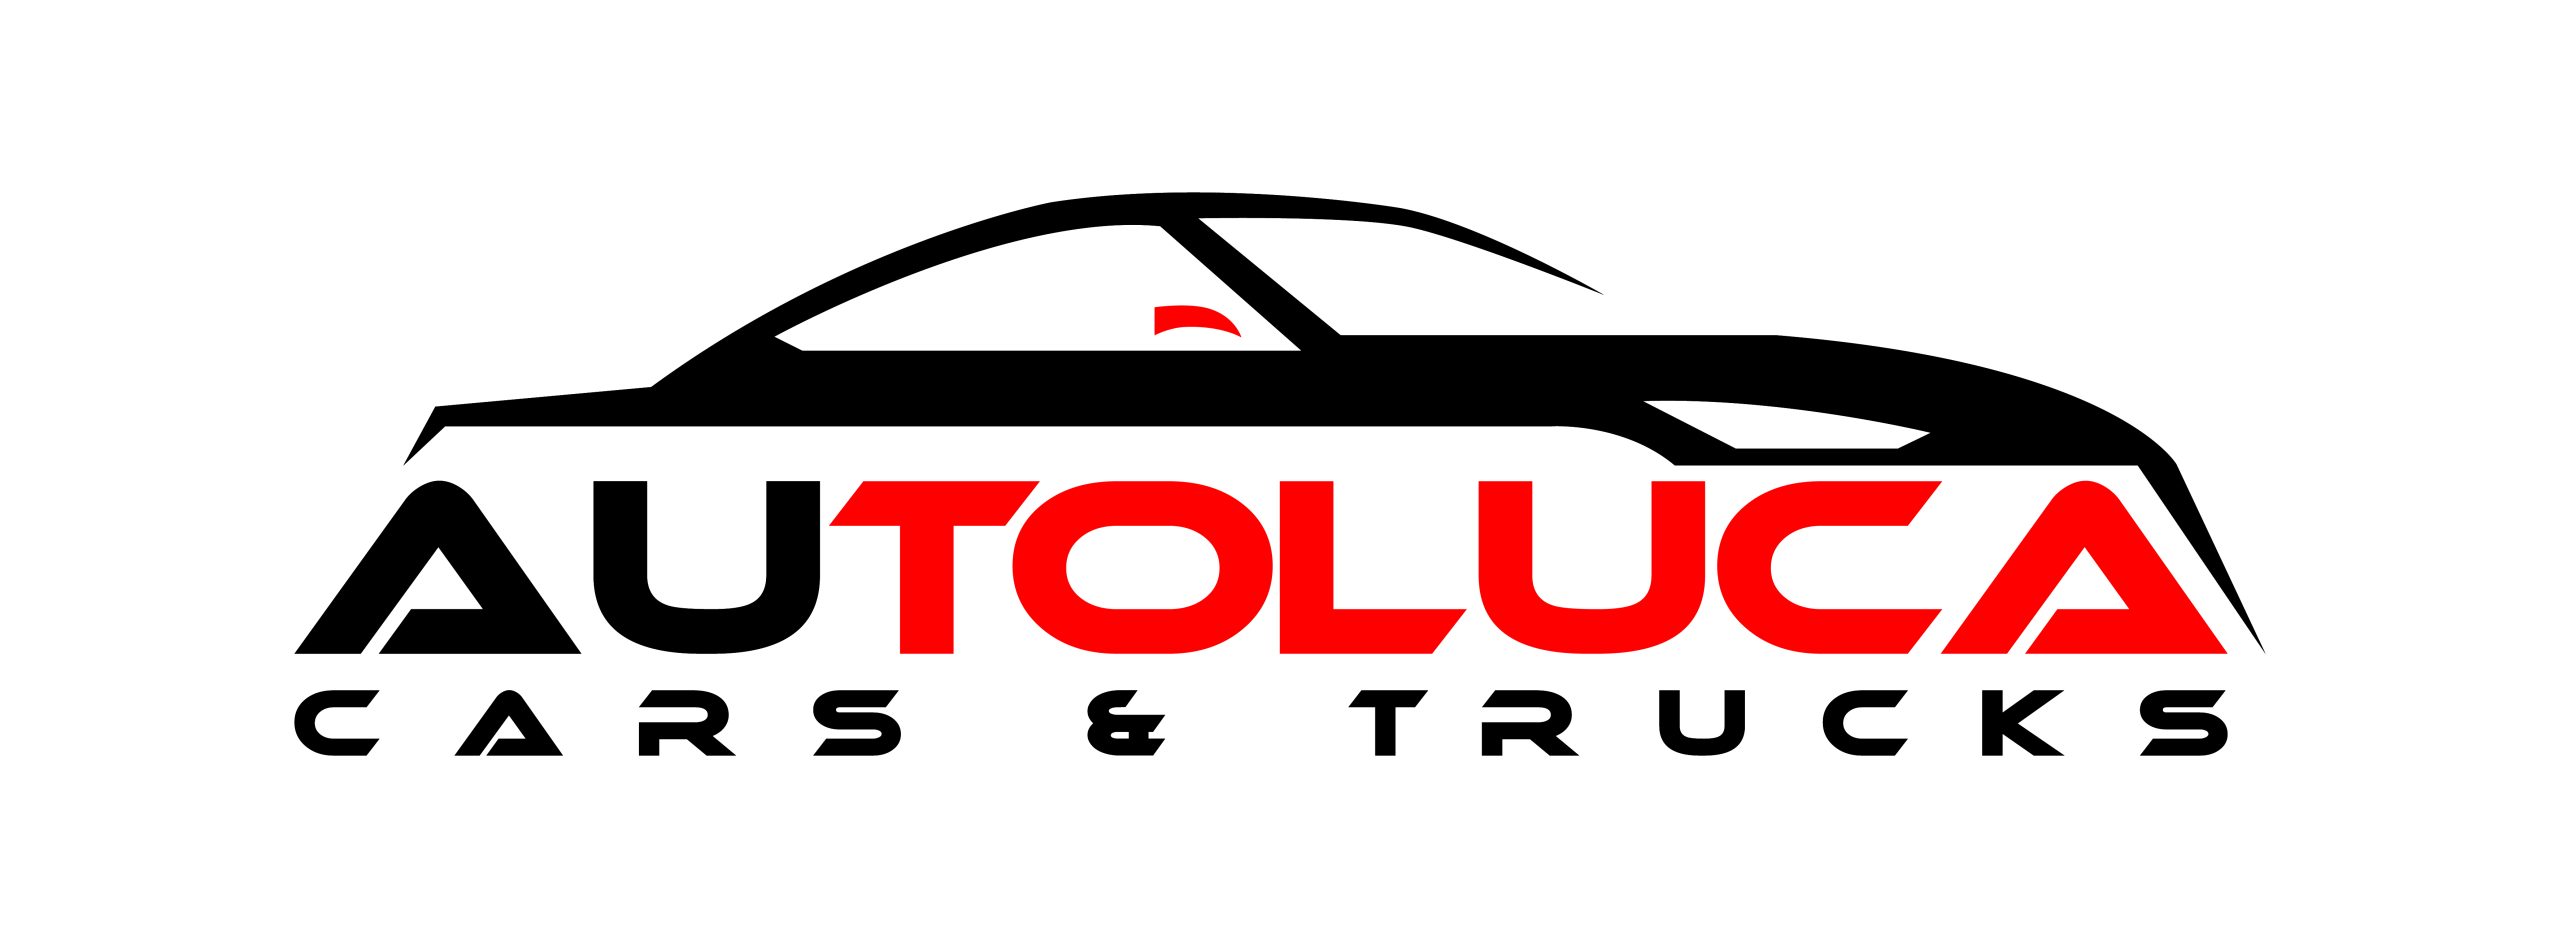 Autoluca Cars and Trucks